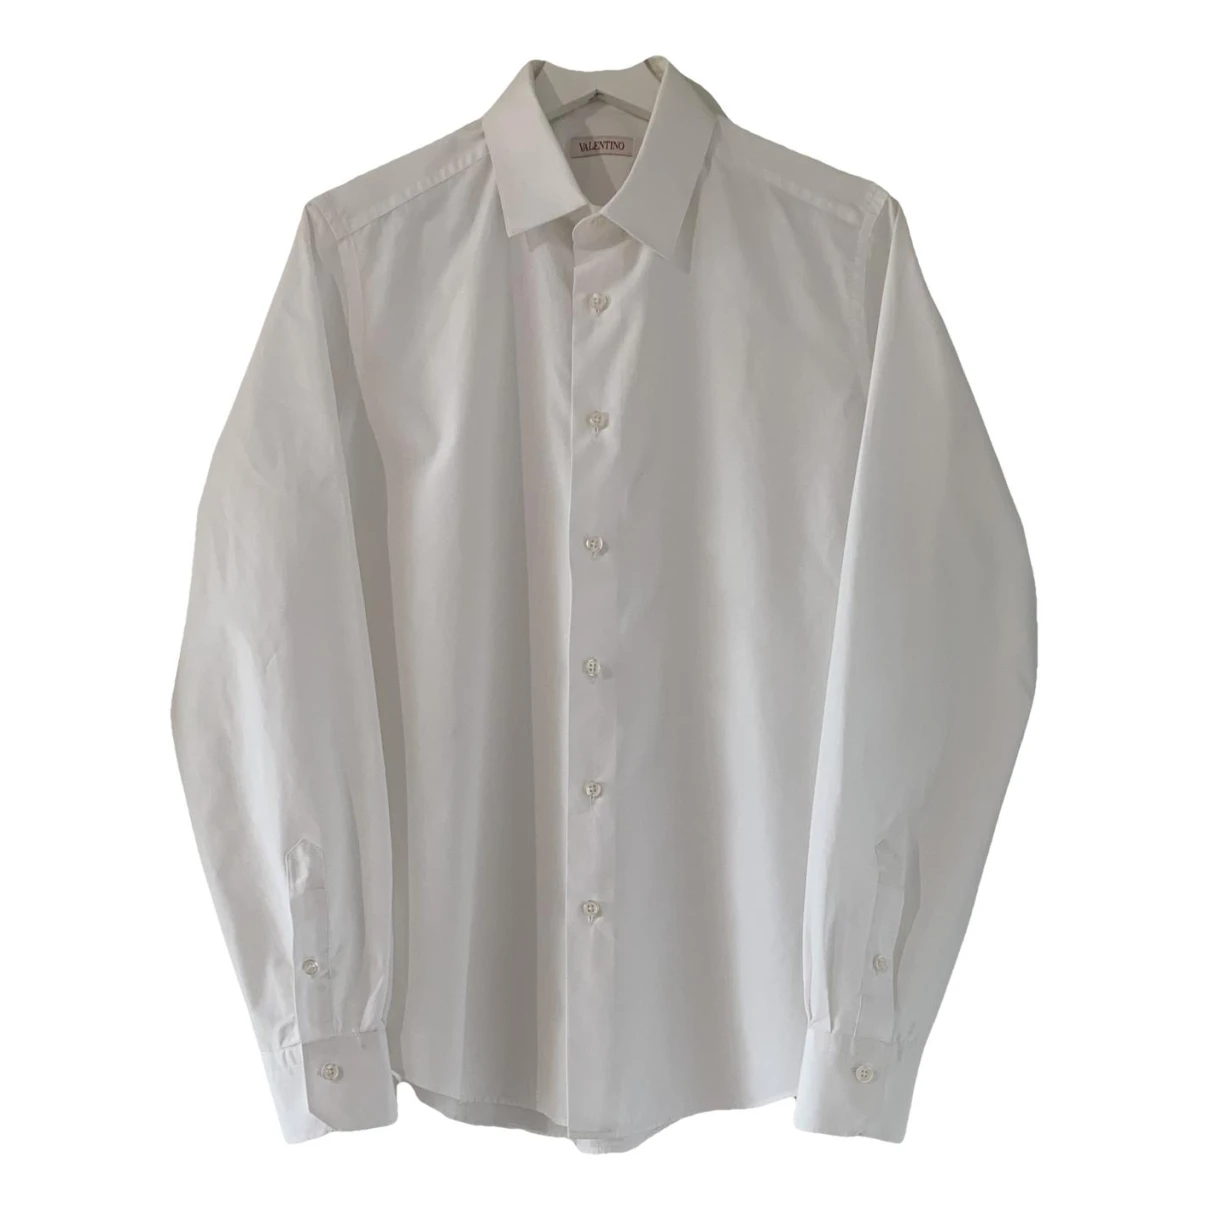 clothing Valentino Garavani shirts for Male Cotton M International. Used condition